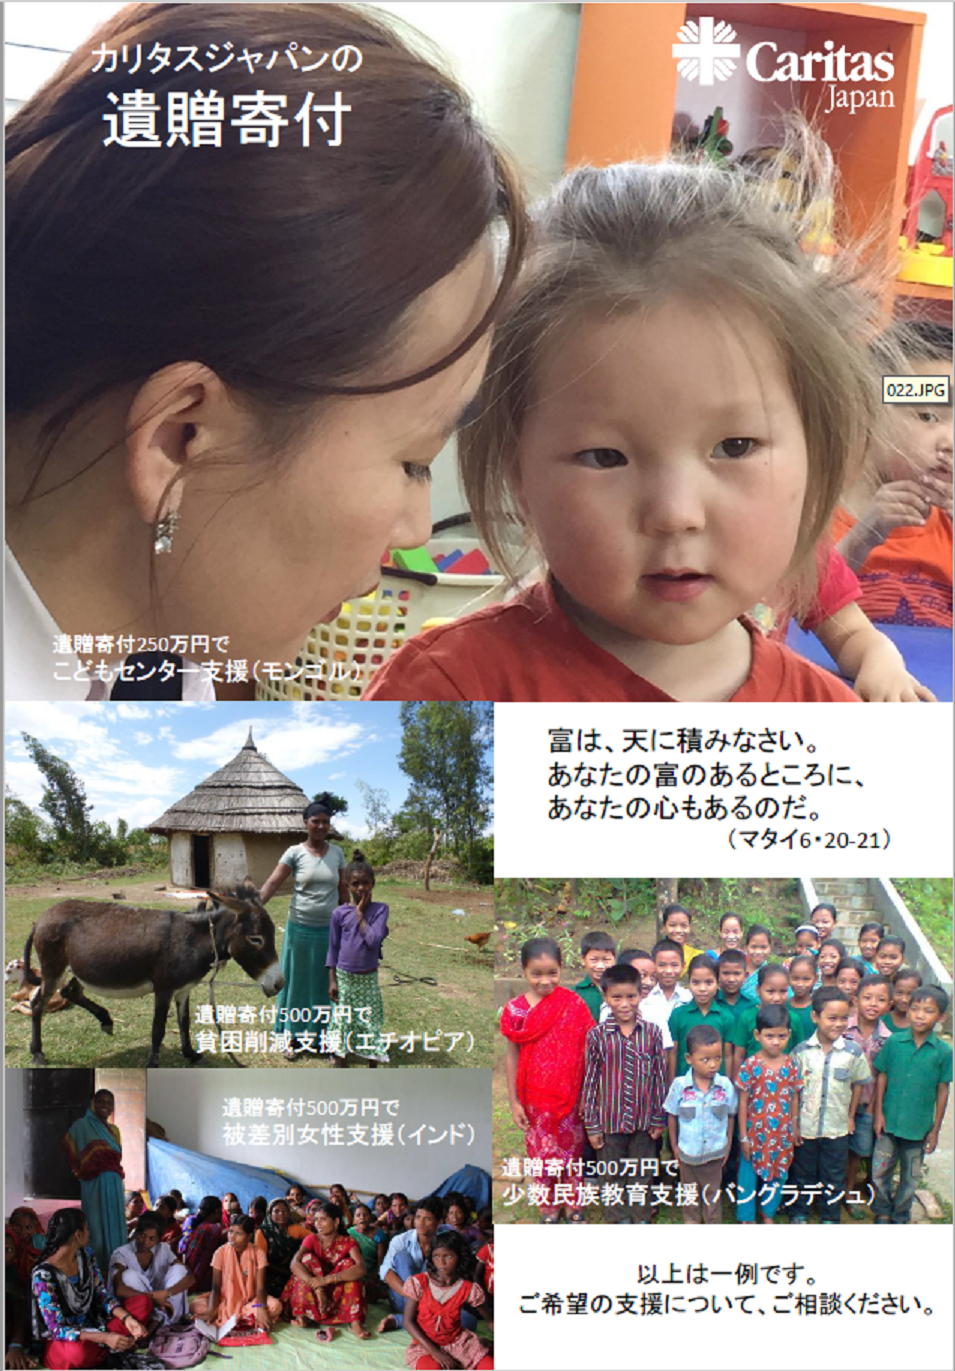 遺贈募金 Caritas Japan